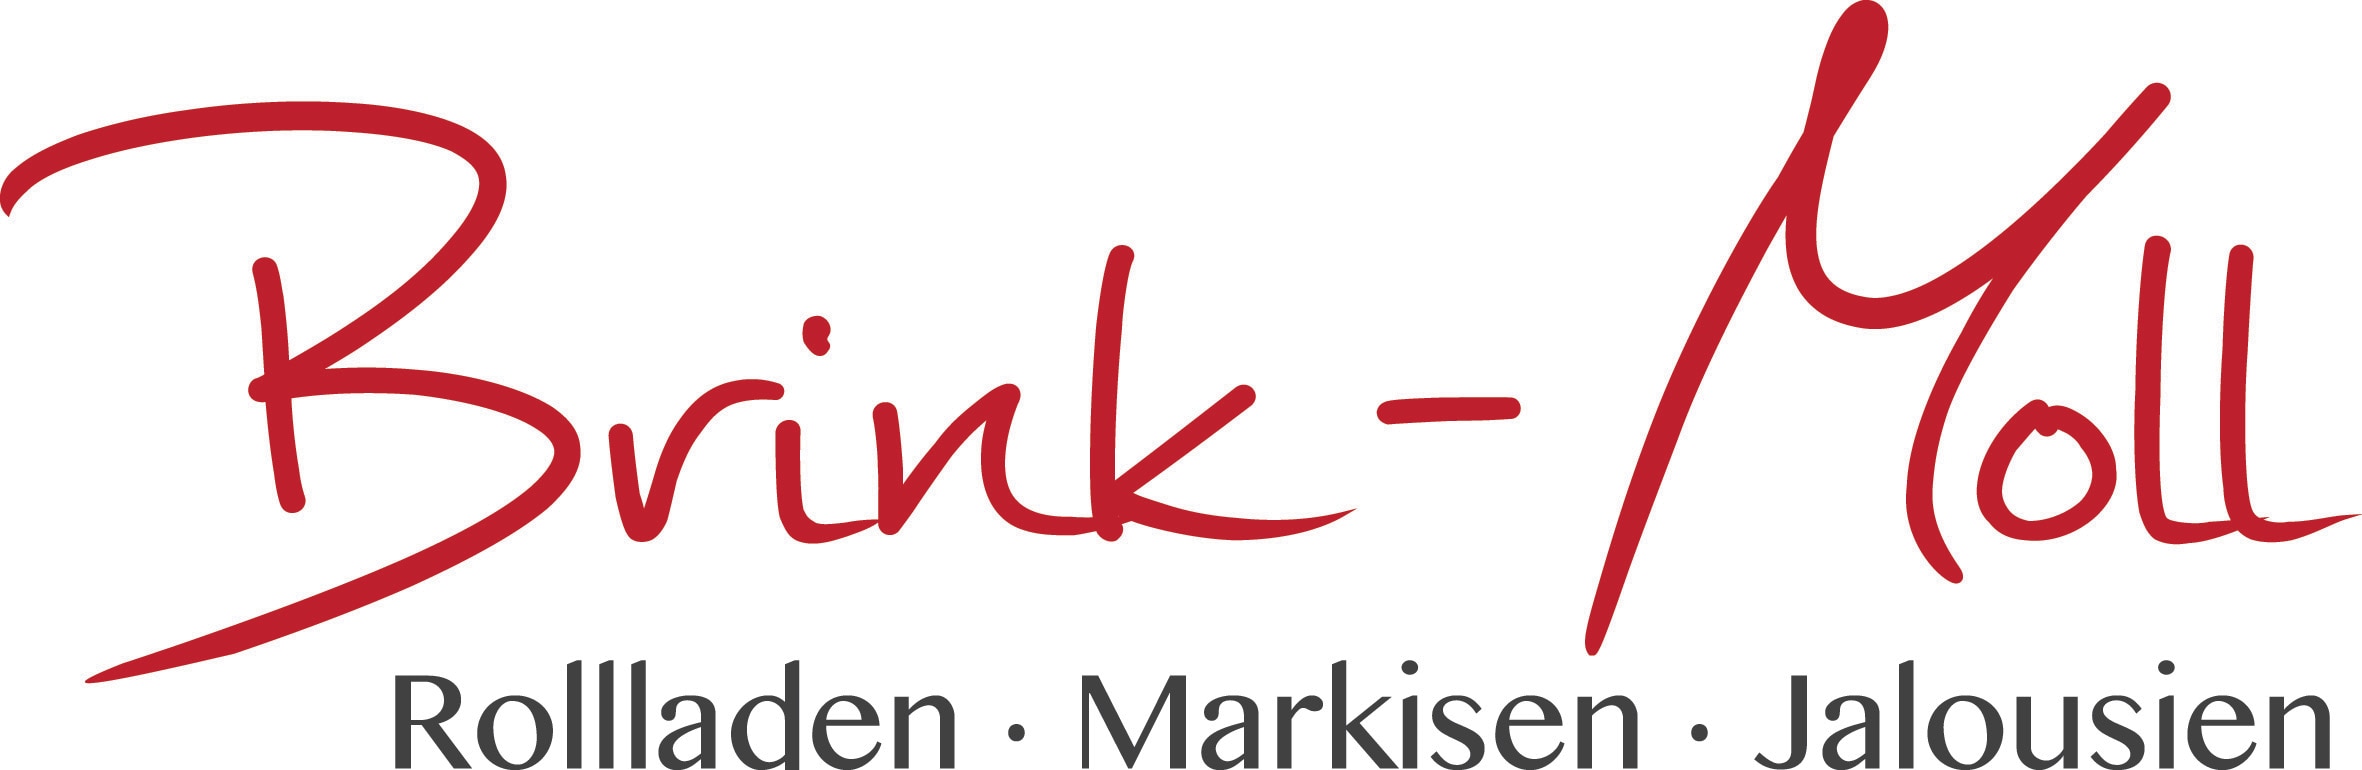 1452-08_BrinkMoll_Logo_Redesign_2017_FIN_IK_CMYK.jpg